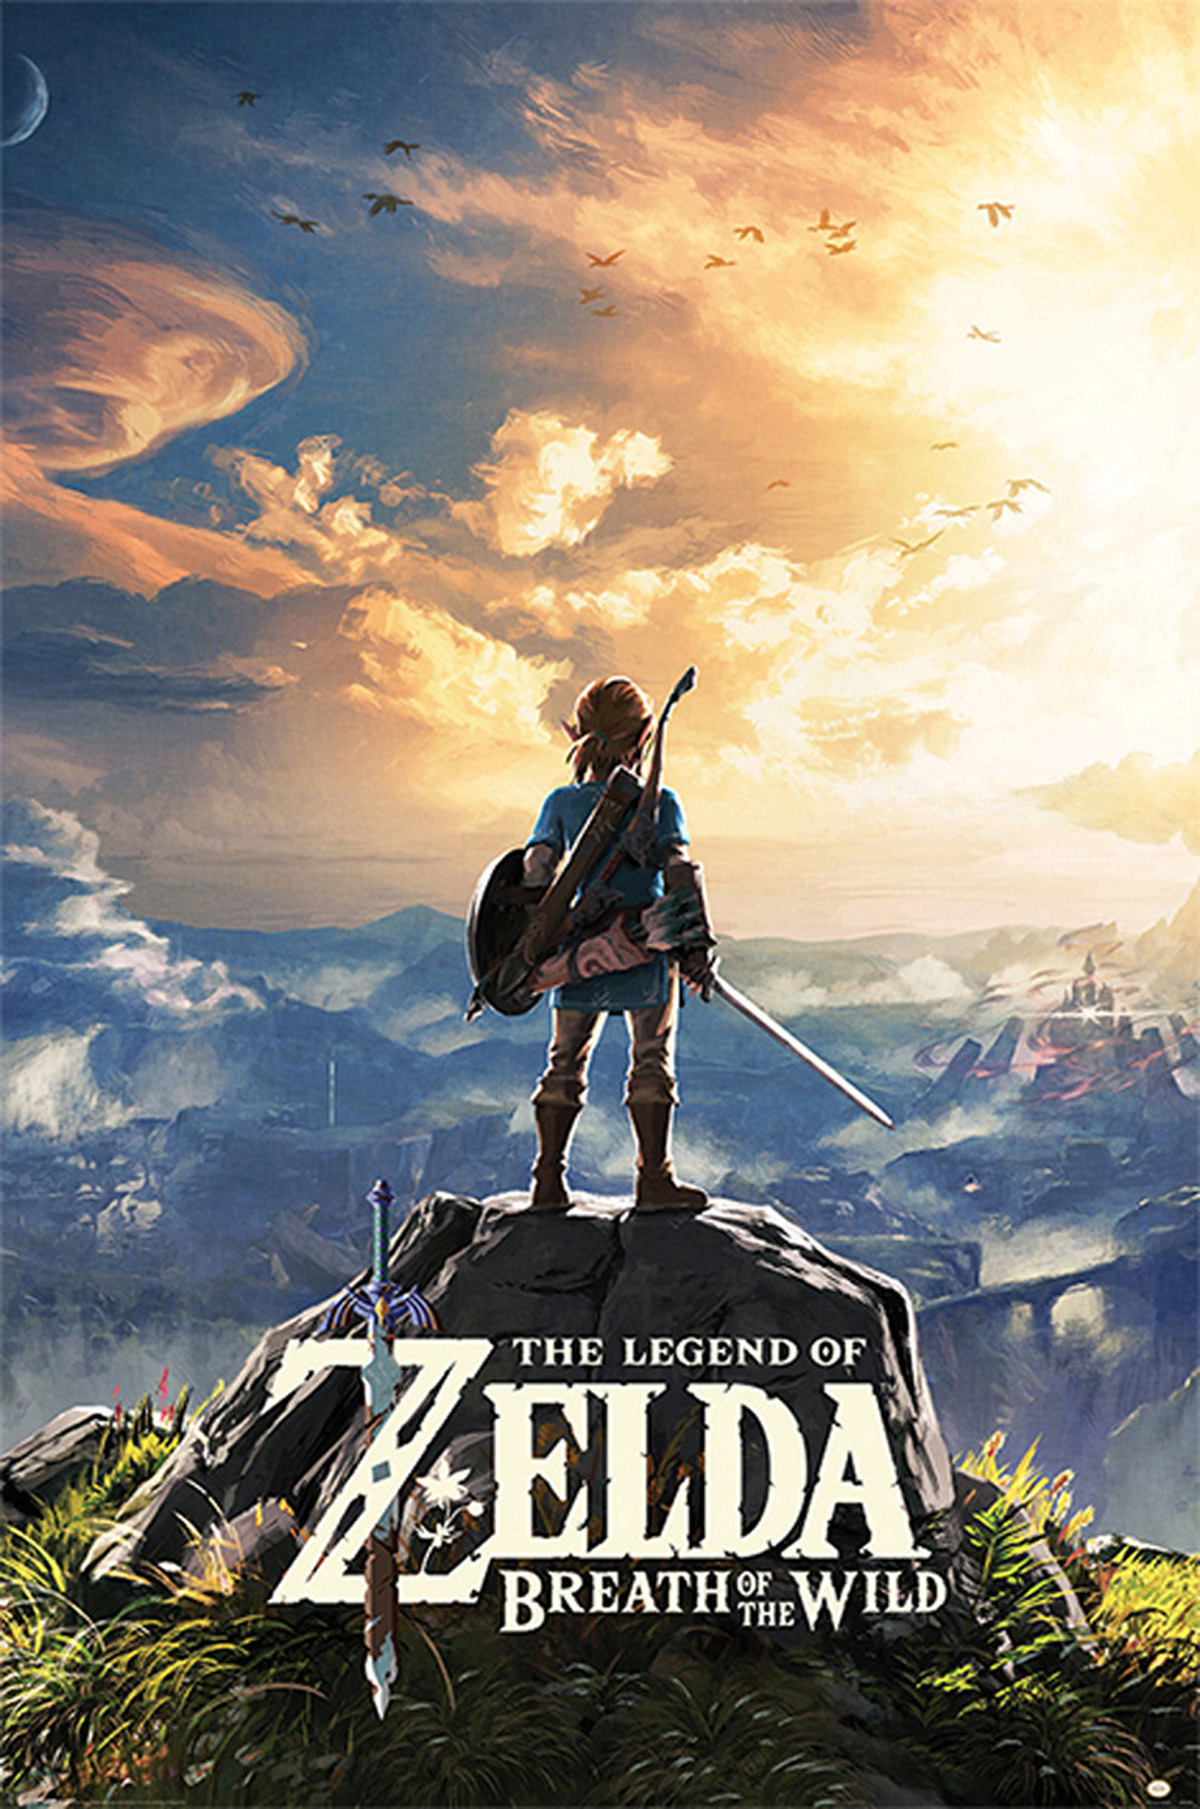 Legend of Zelda, Wild of - - Breath Sunset the The